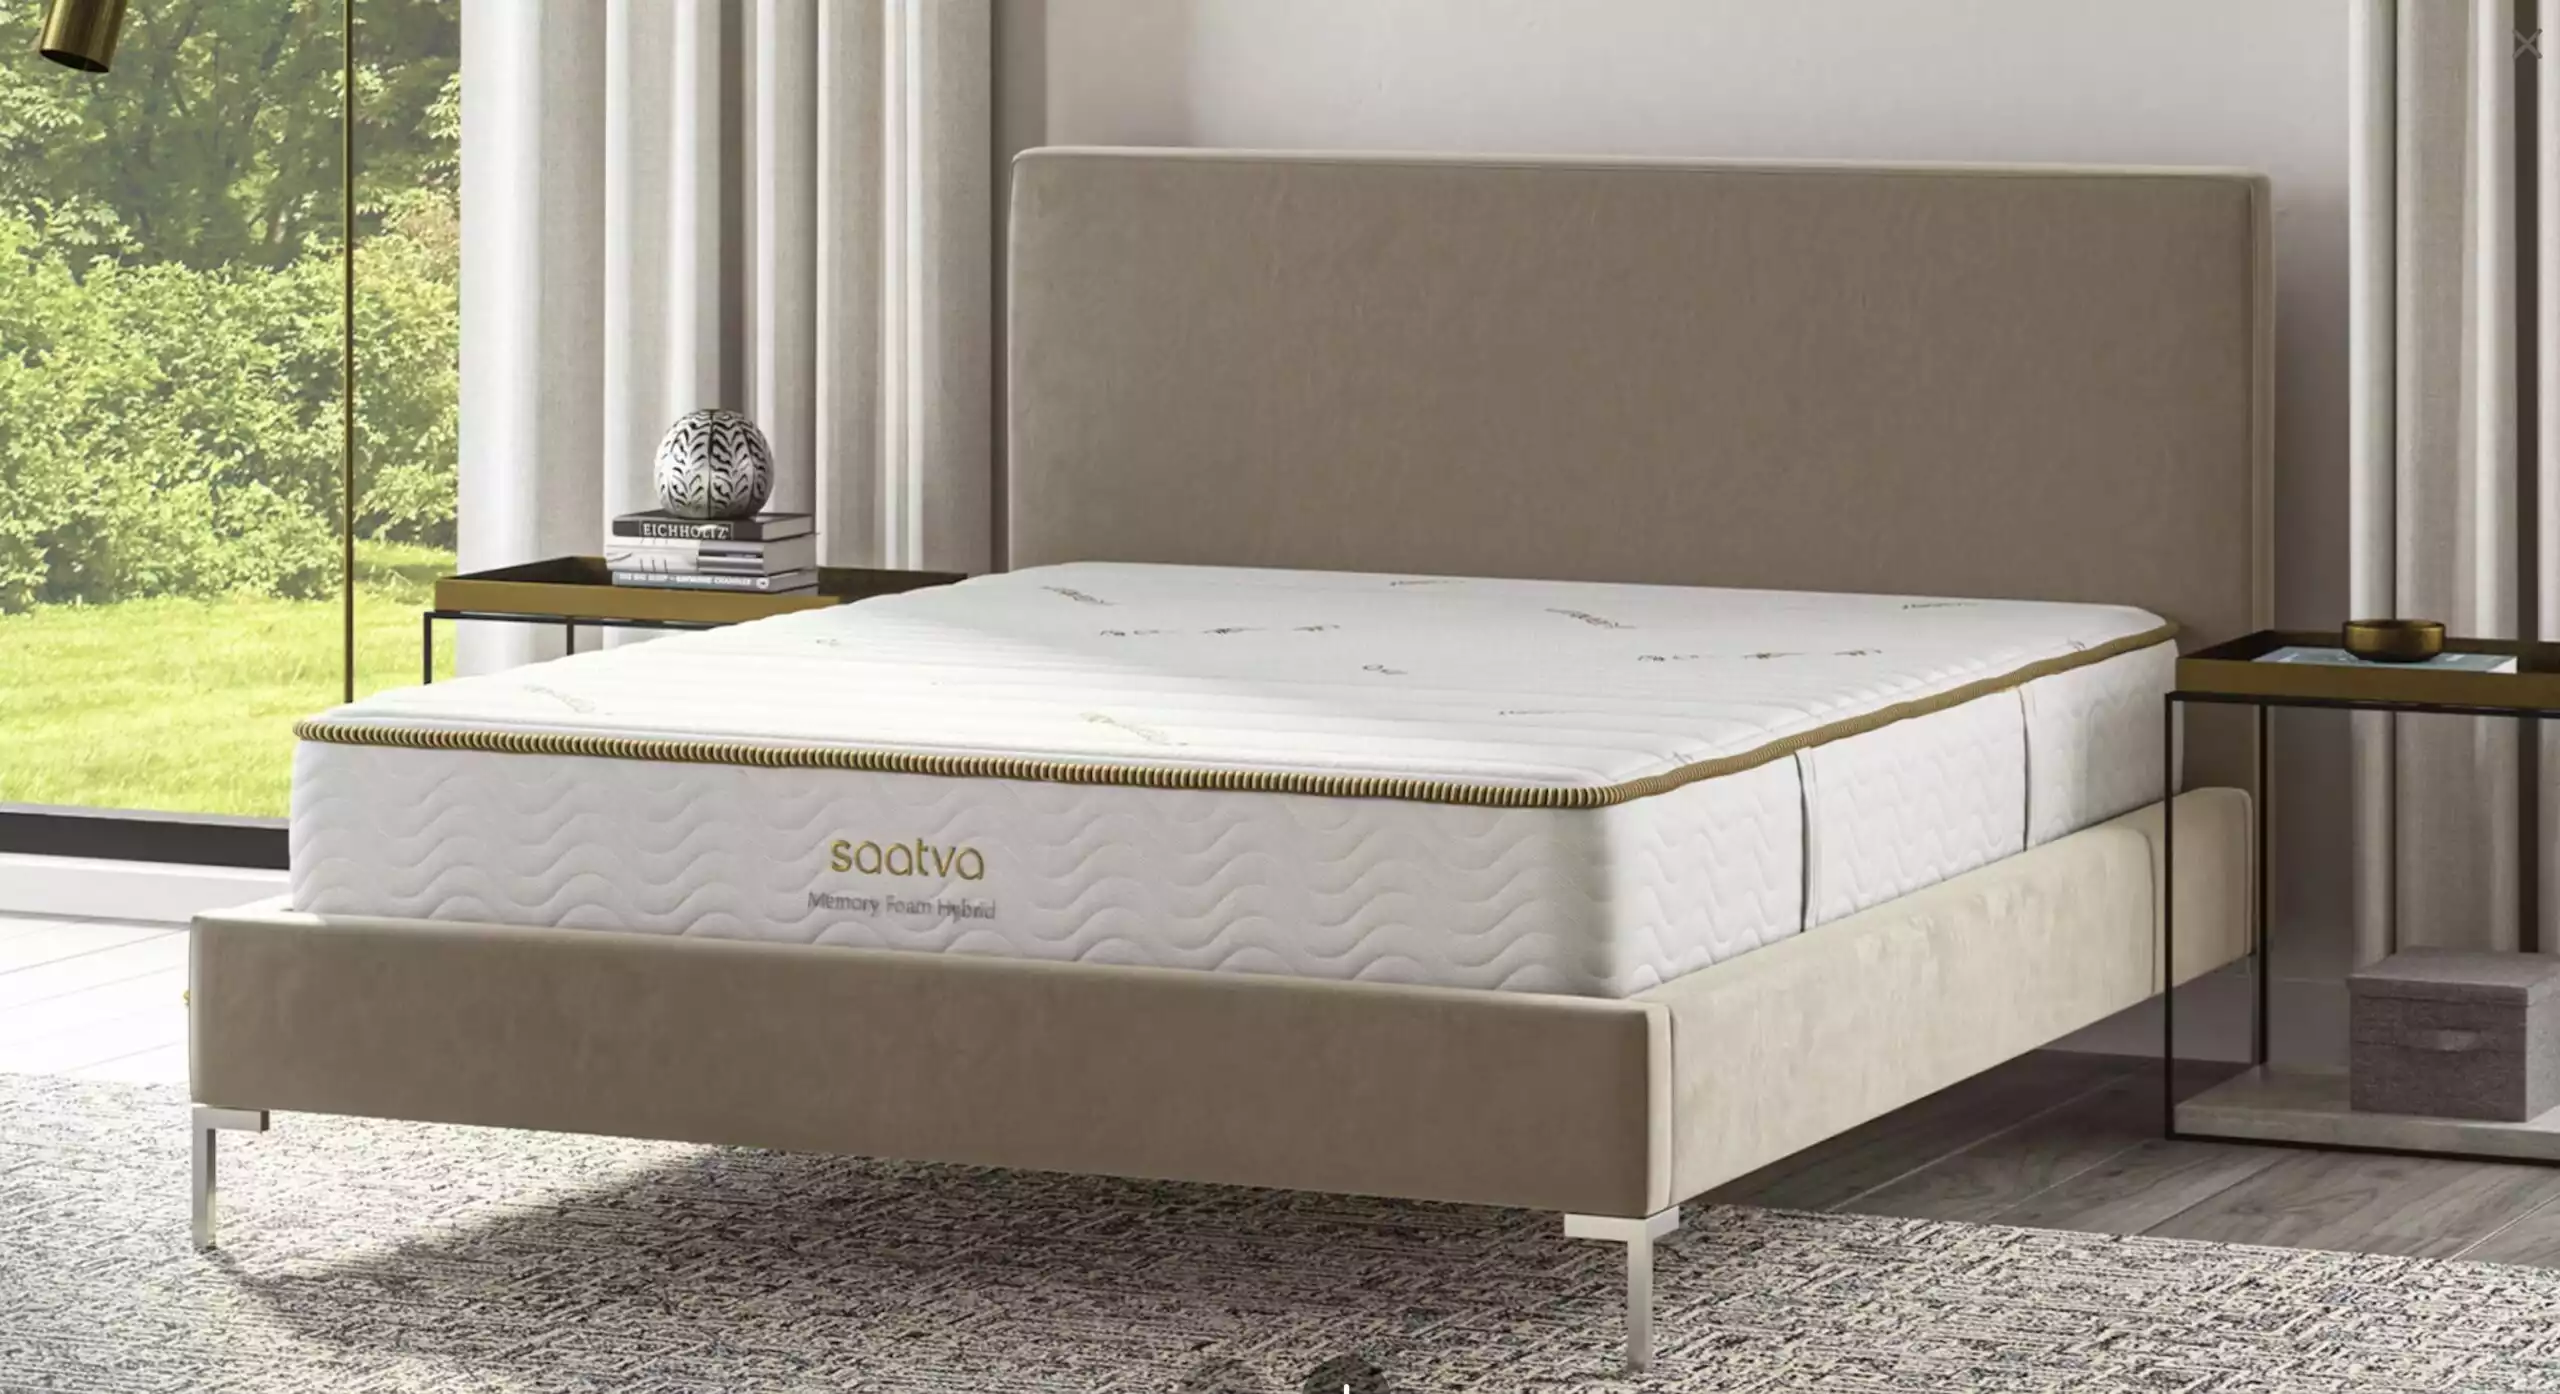 Introducing the Sonu Sleep Side Sleeper Mattress: The Ultimate Solution for a Good Night’s Sleep